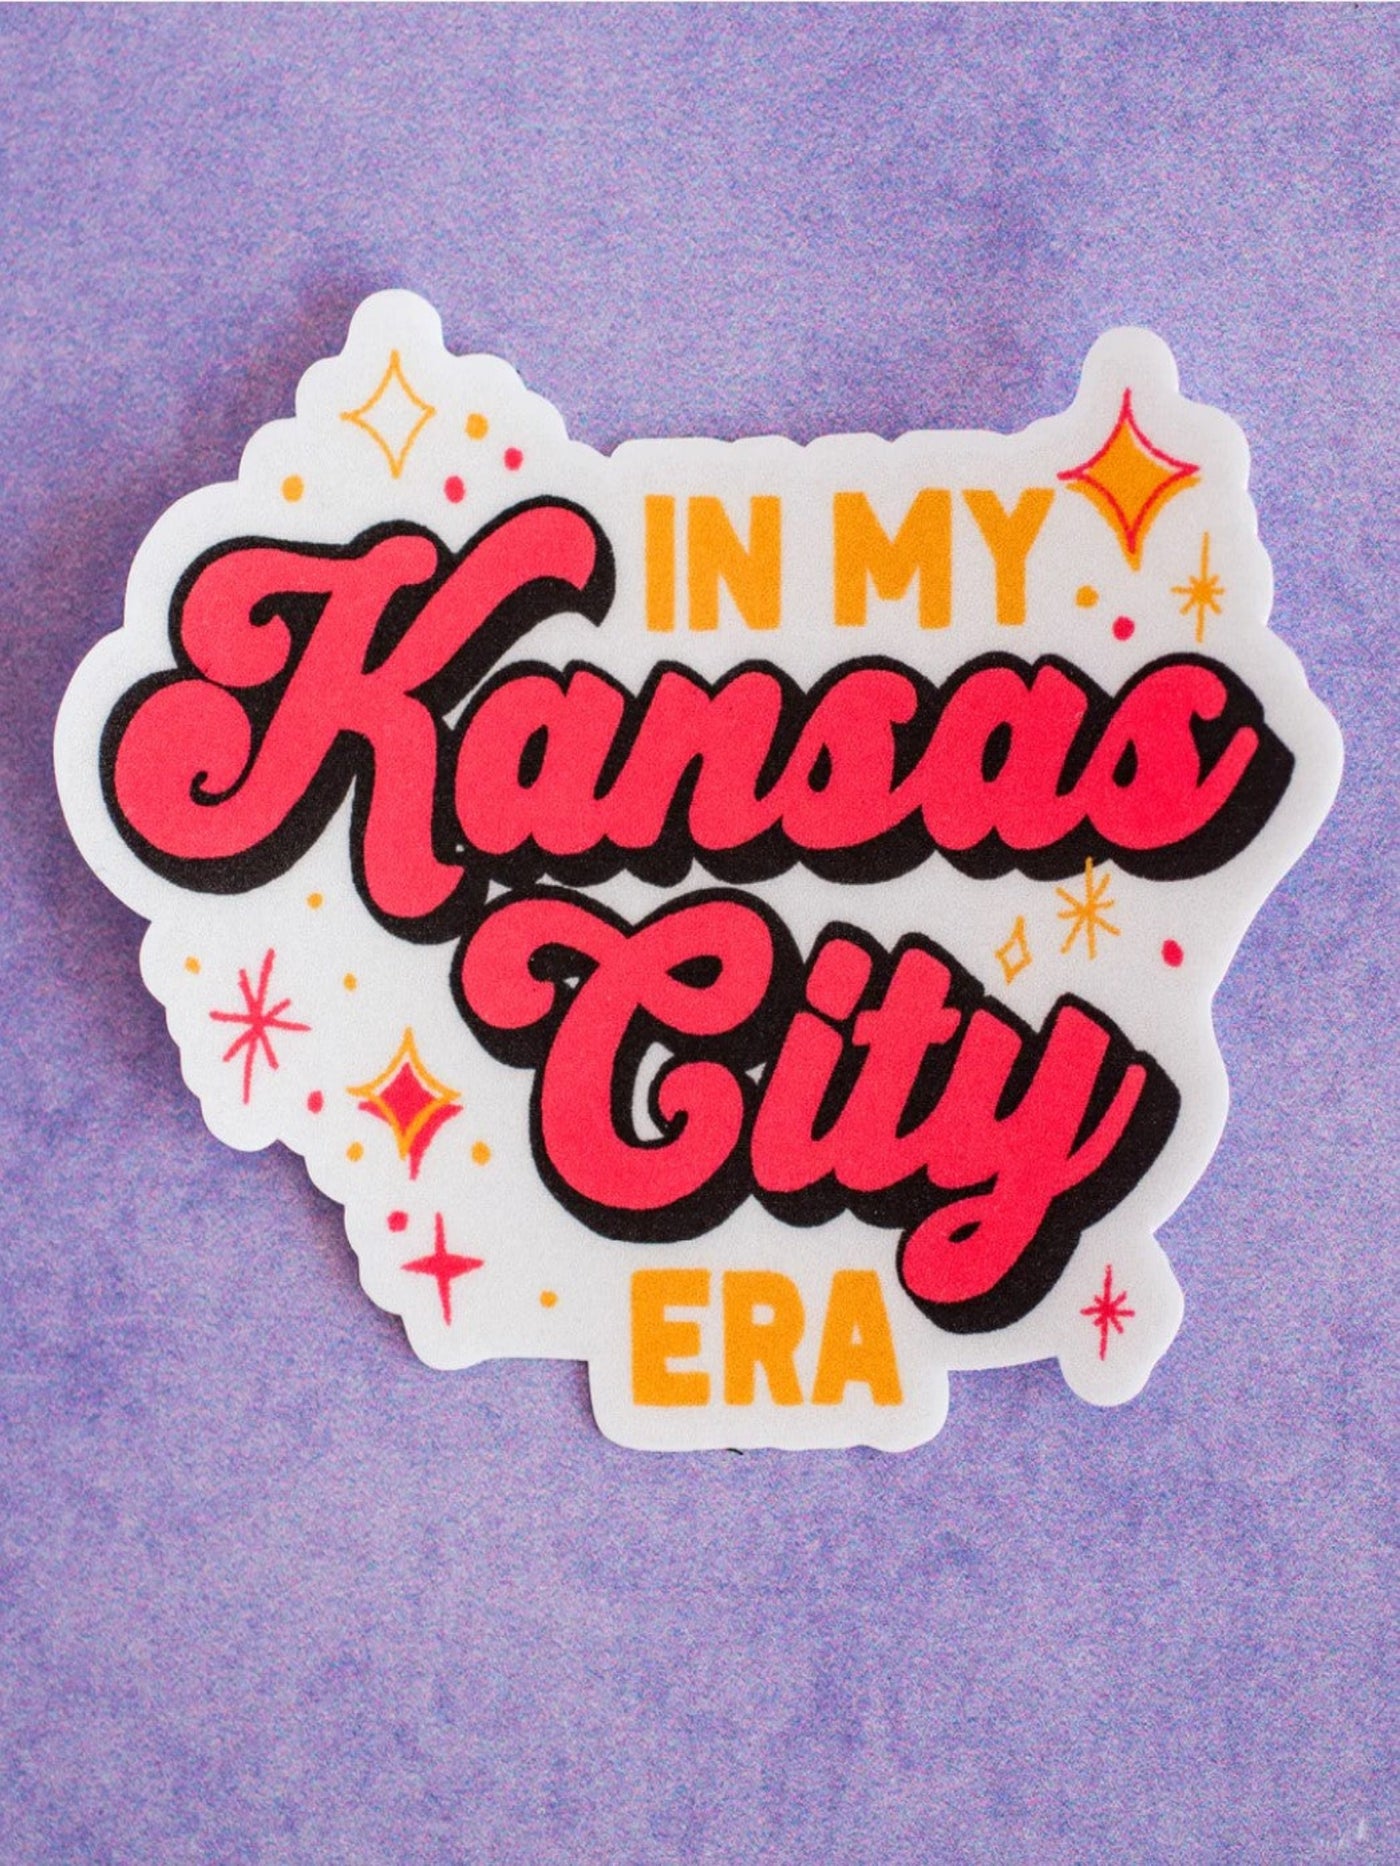 Kansas City Stickers, Kansas City Era